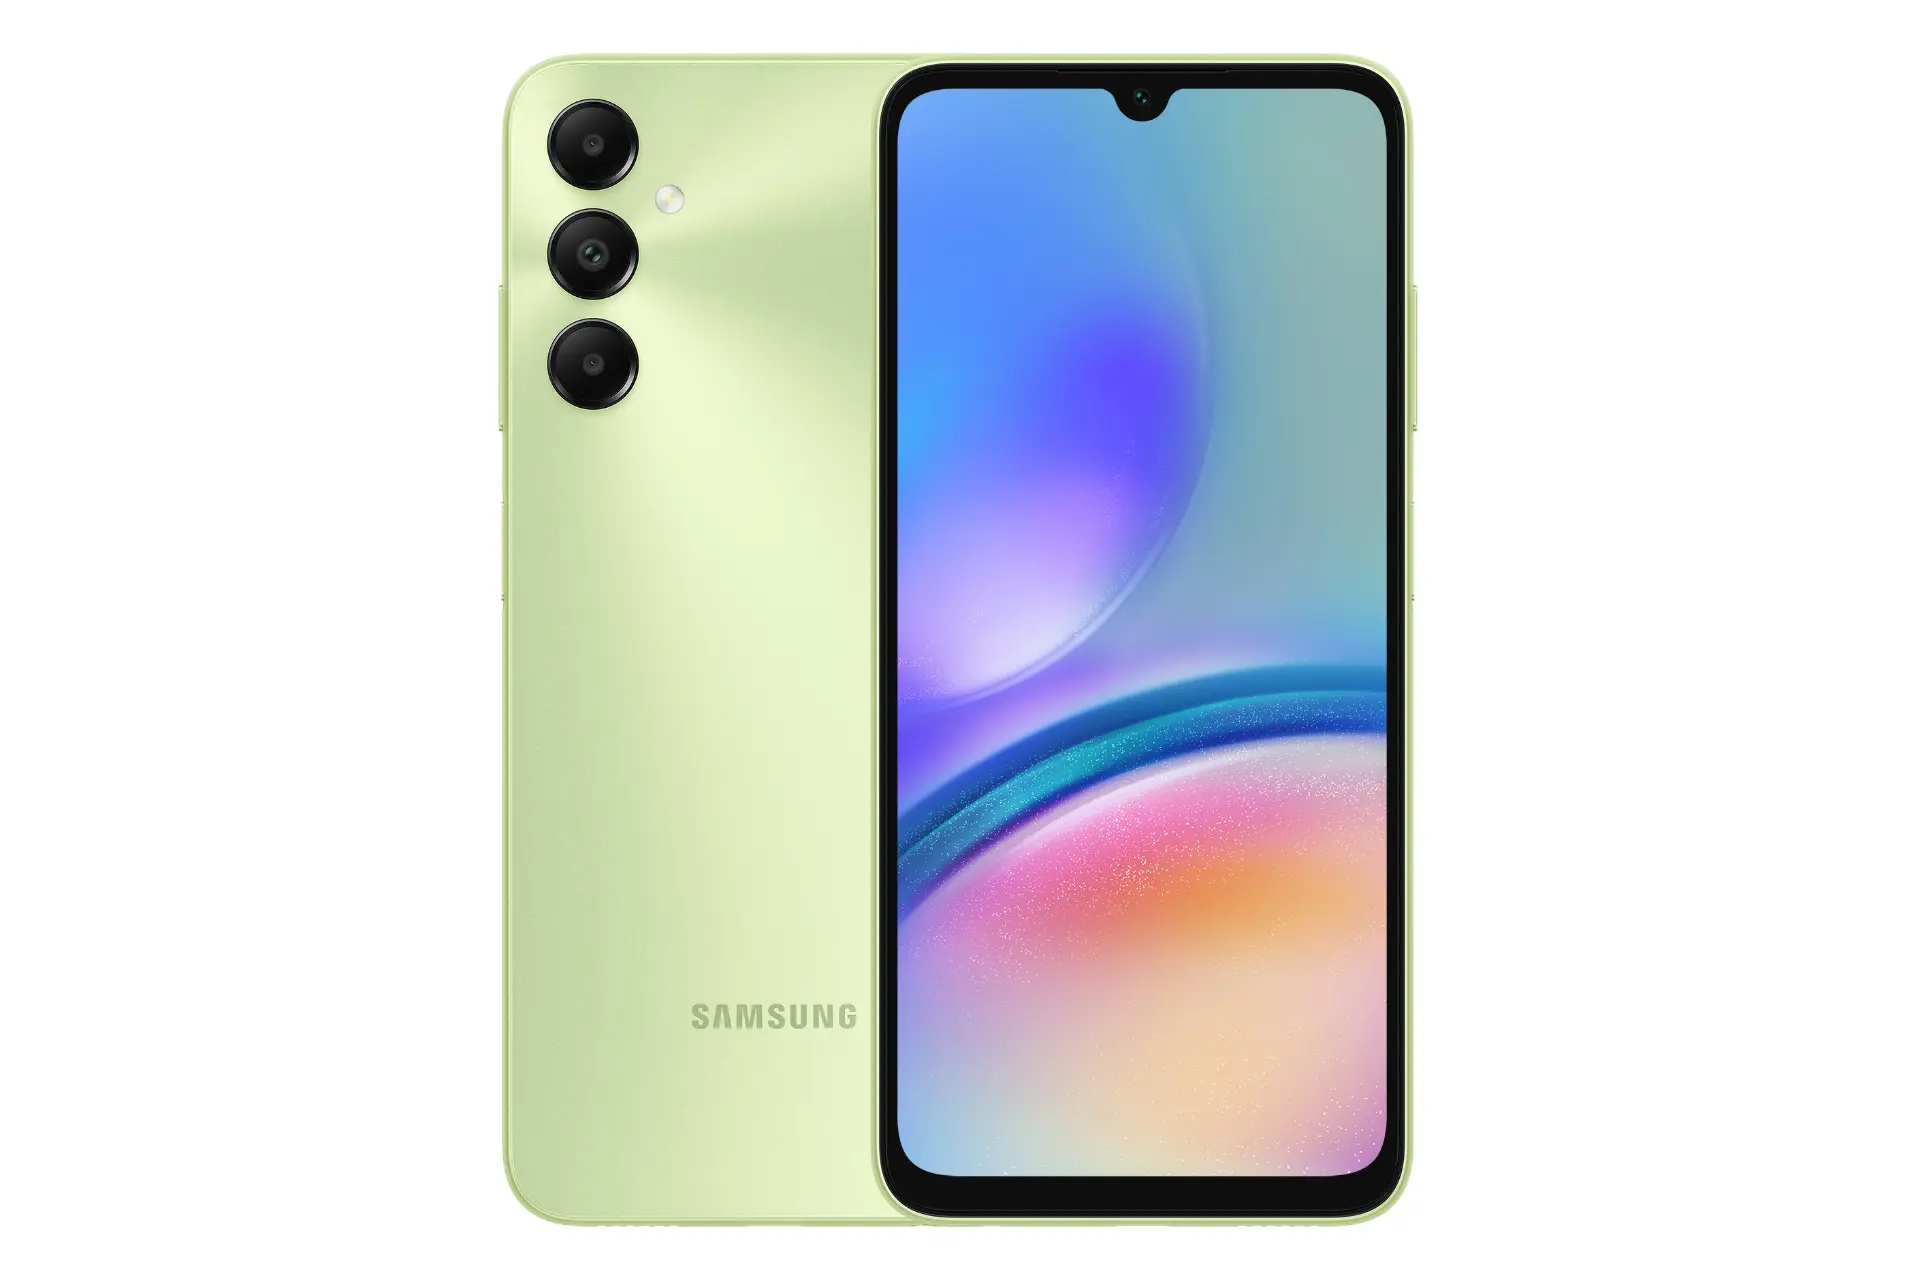 گوشی موبایل گلکسی A05s سامسونگ / Samsung Galaxy A05s سبز روشن